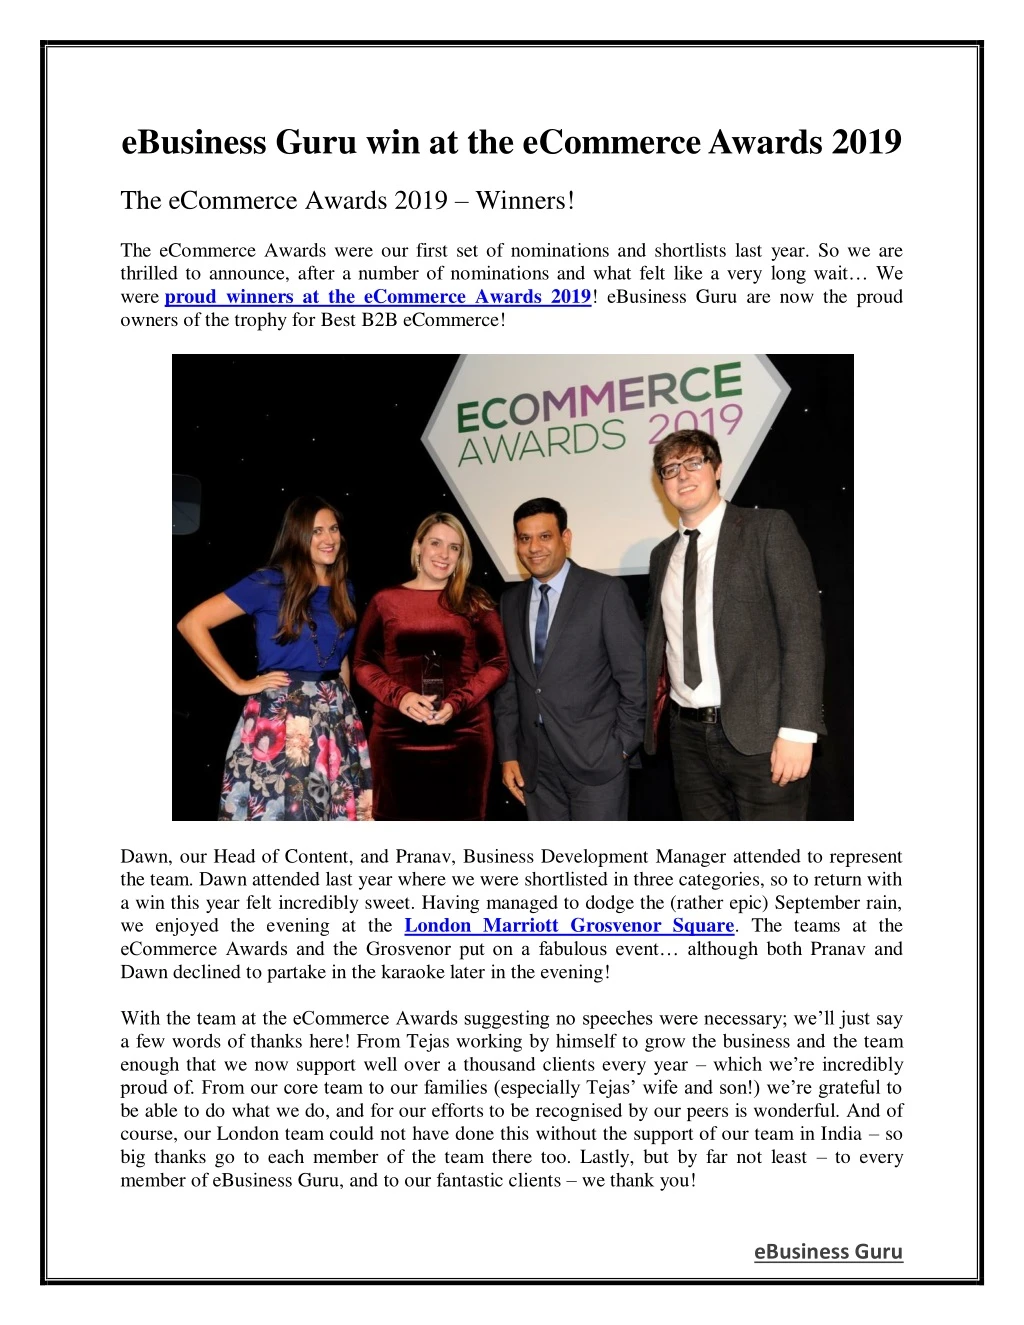 ebusiness guru win at the ecommerce awards 2019